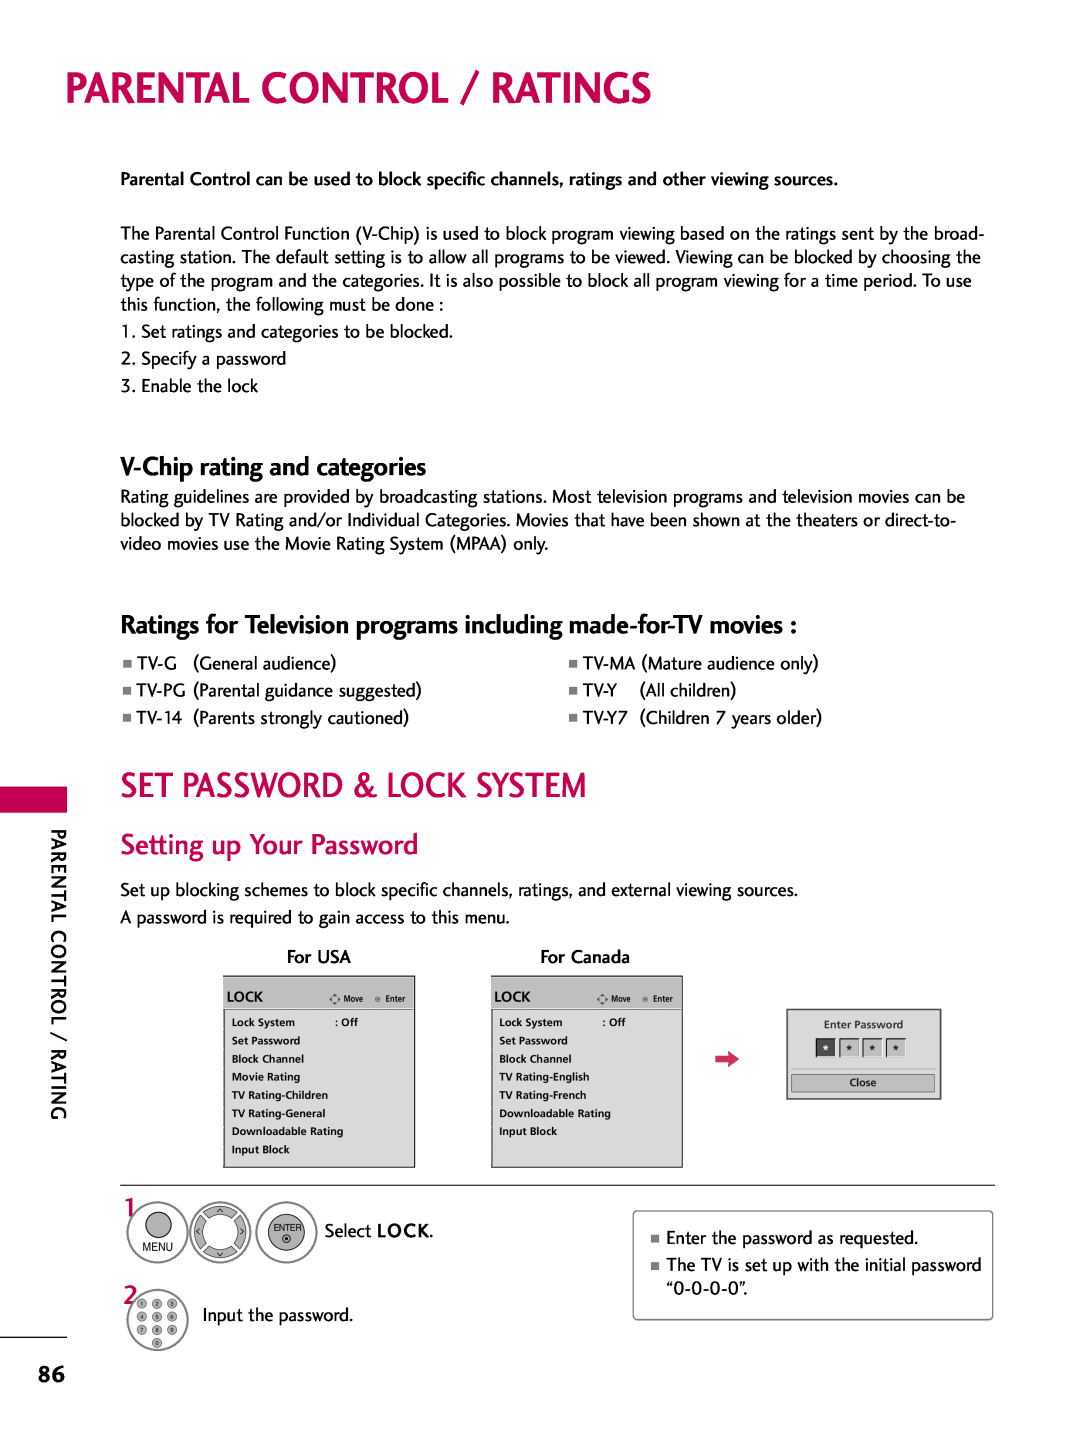 LG Electronics 42PQ12, 50PQ12 owner manual Parental Control / Ratings, Set Password & Lock System, Setting up Your Password 